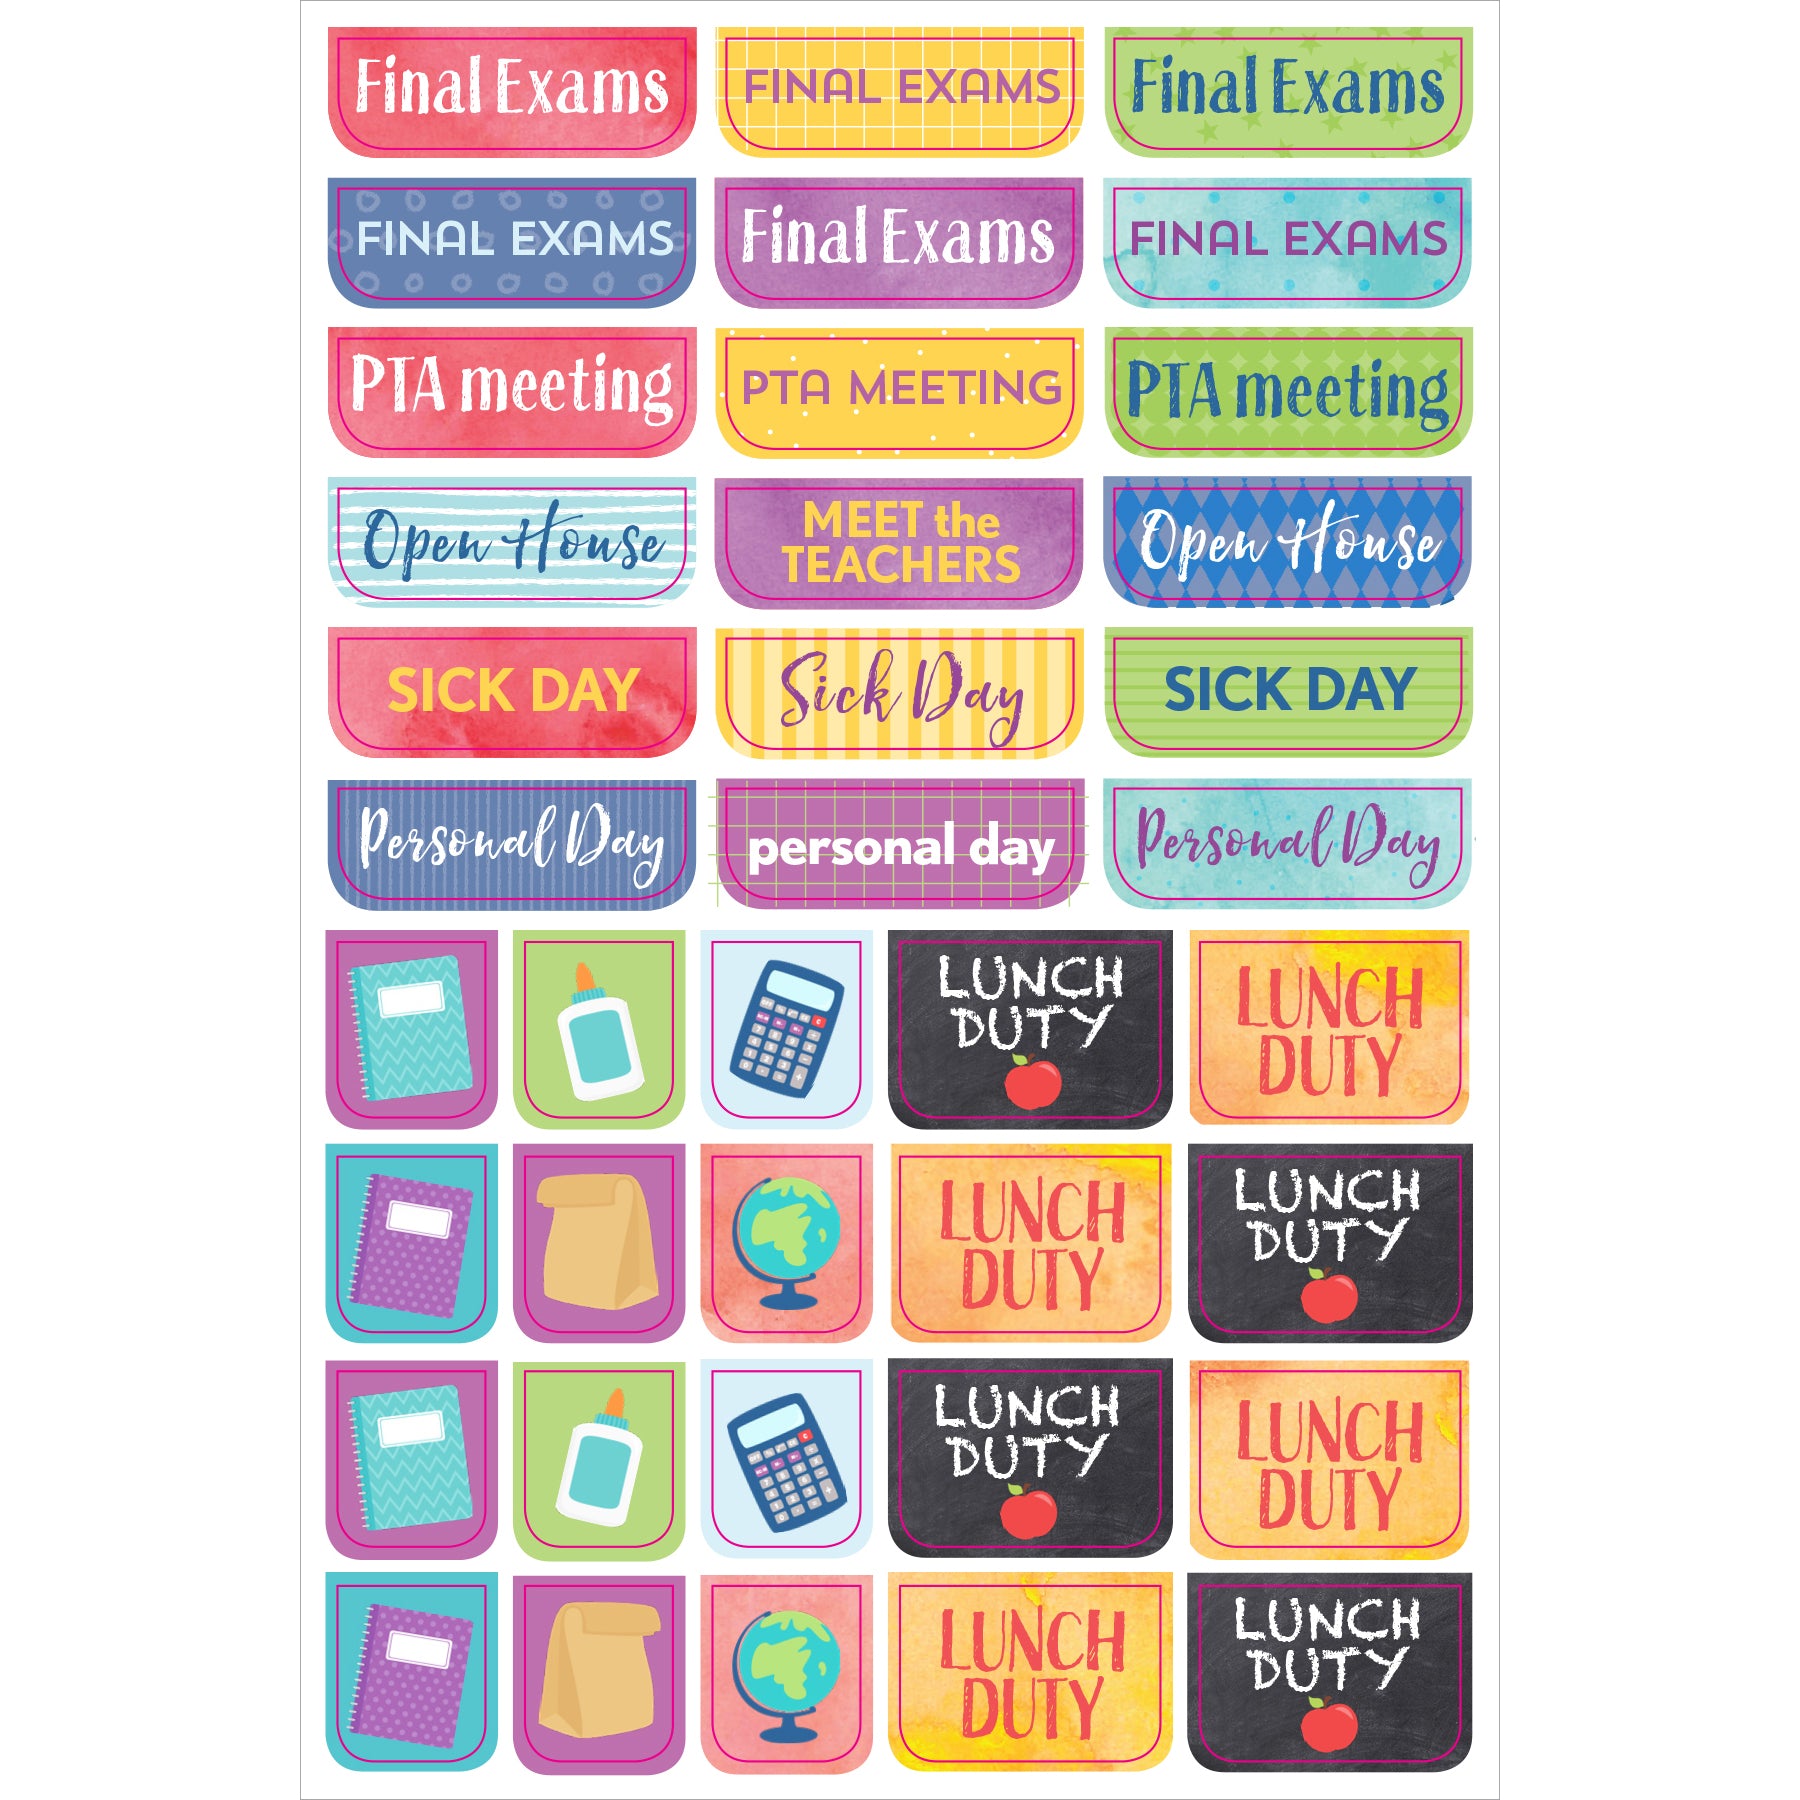 Teacher Planner Stickers - 12 sheets - Paper Kooka